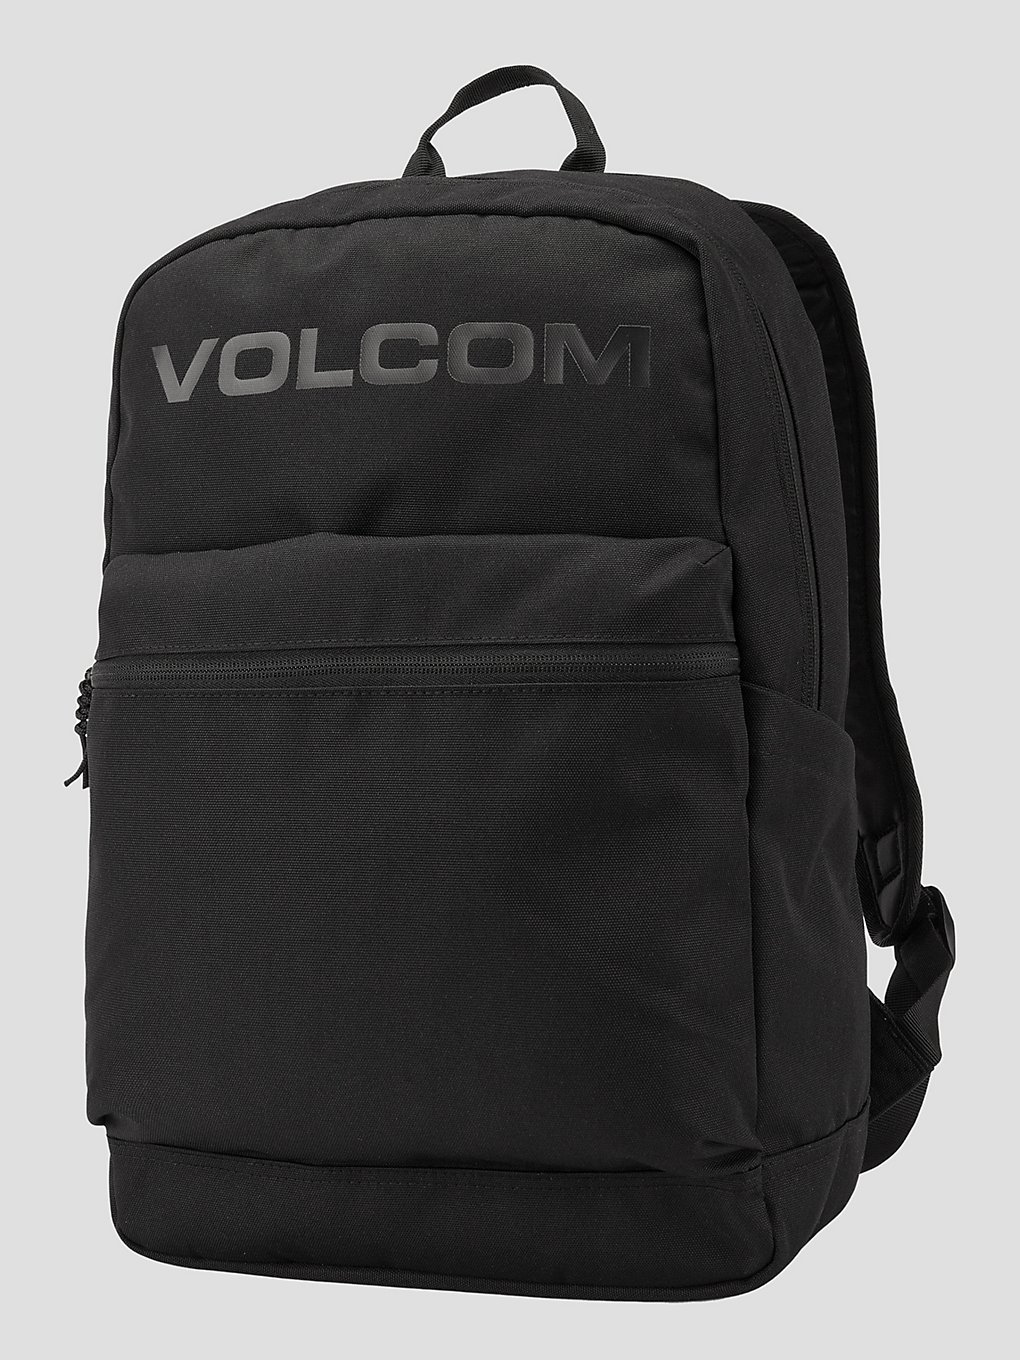 Volcom School Rucksack black on black kaufen